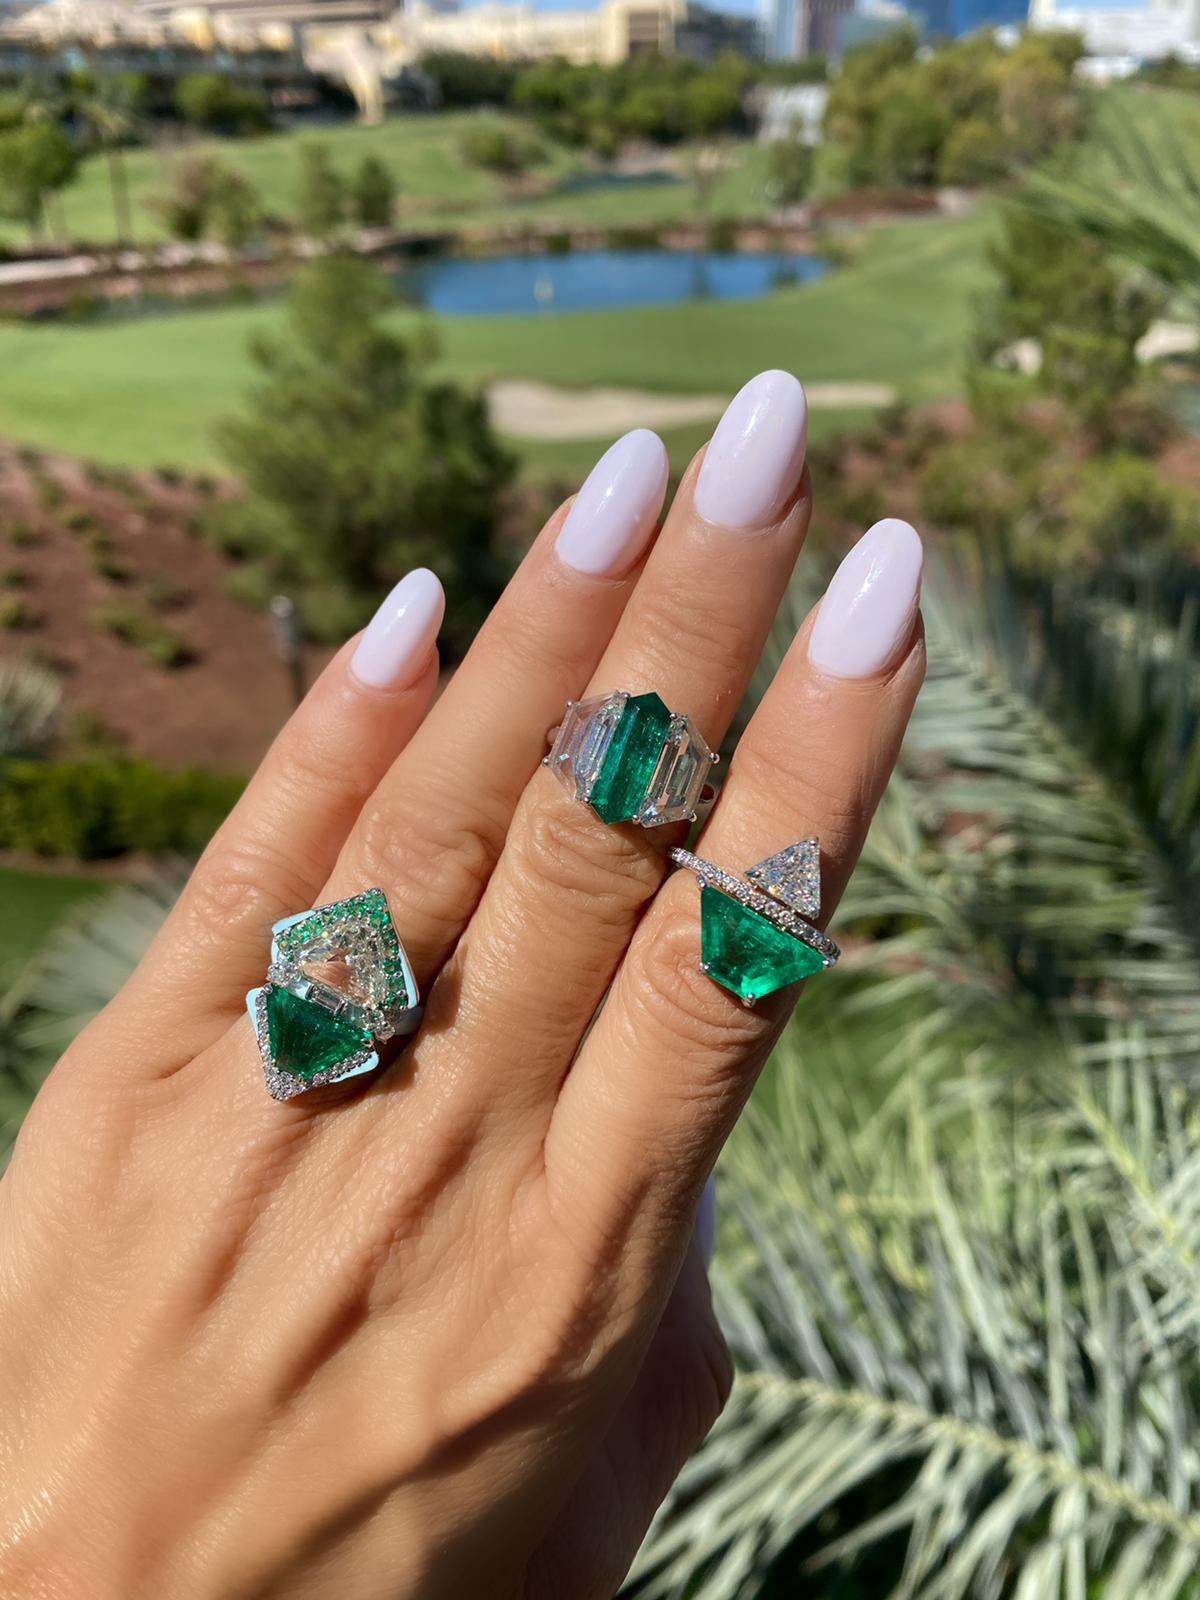 200 carats of emeralds